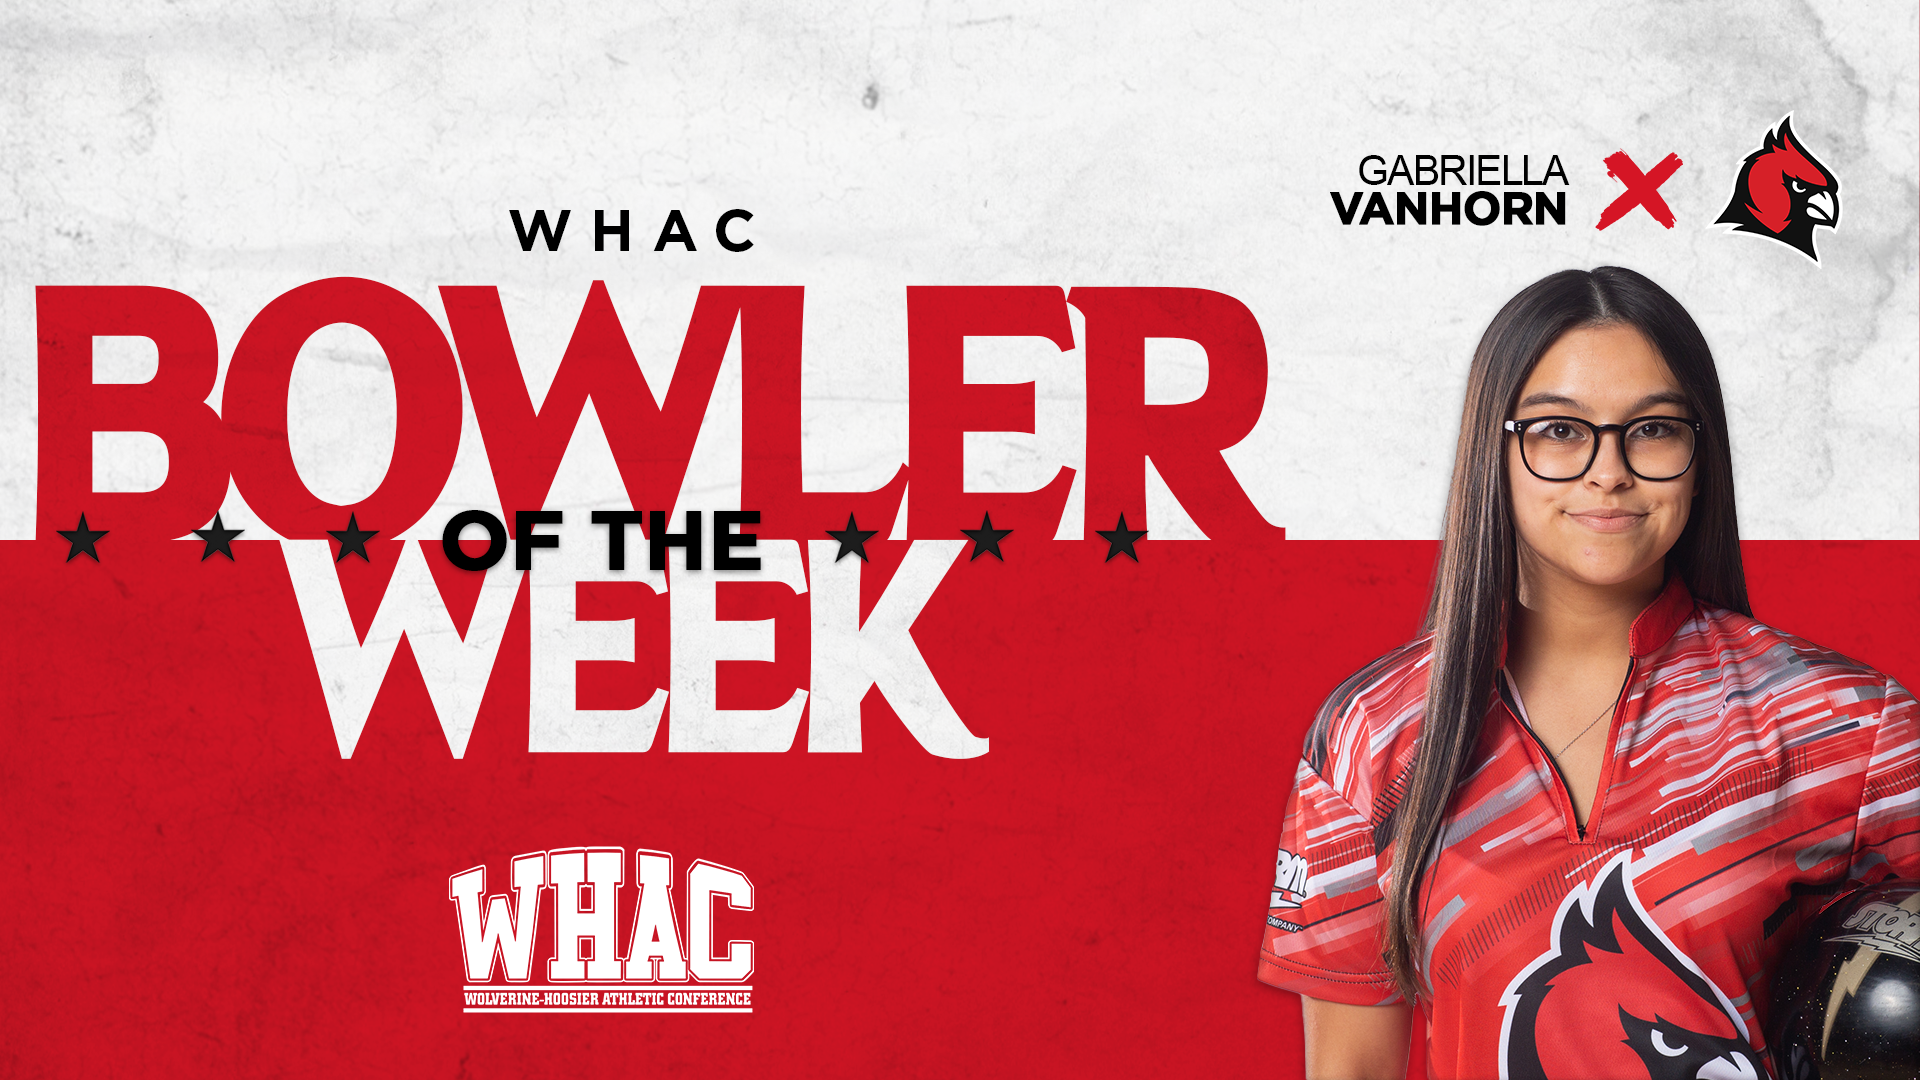 Women's Bowling VanHorn wins third WHAC Bowler of the Week honors